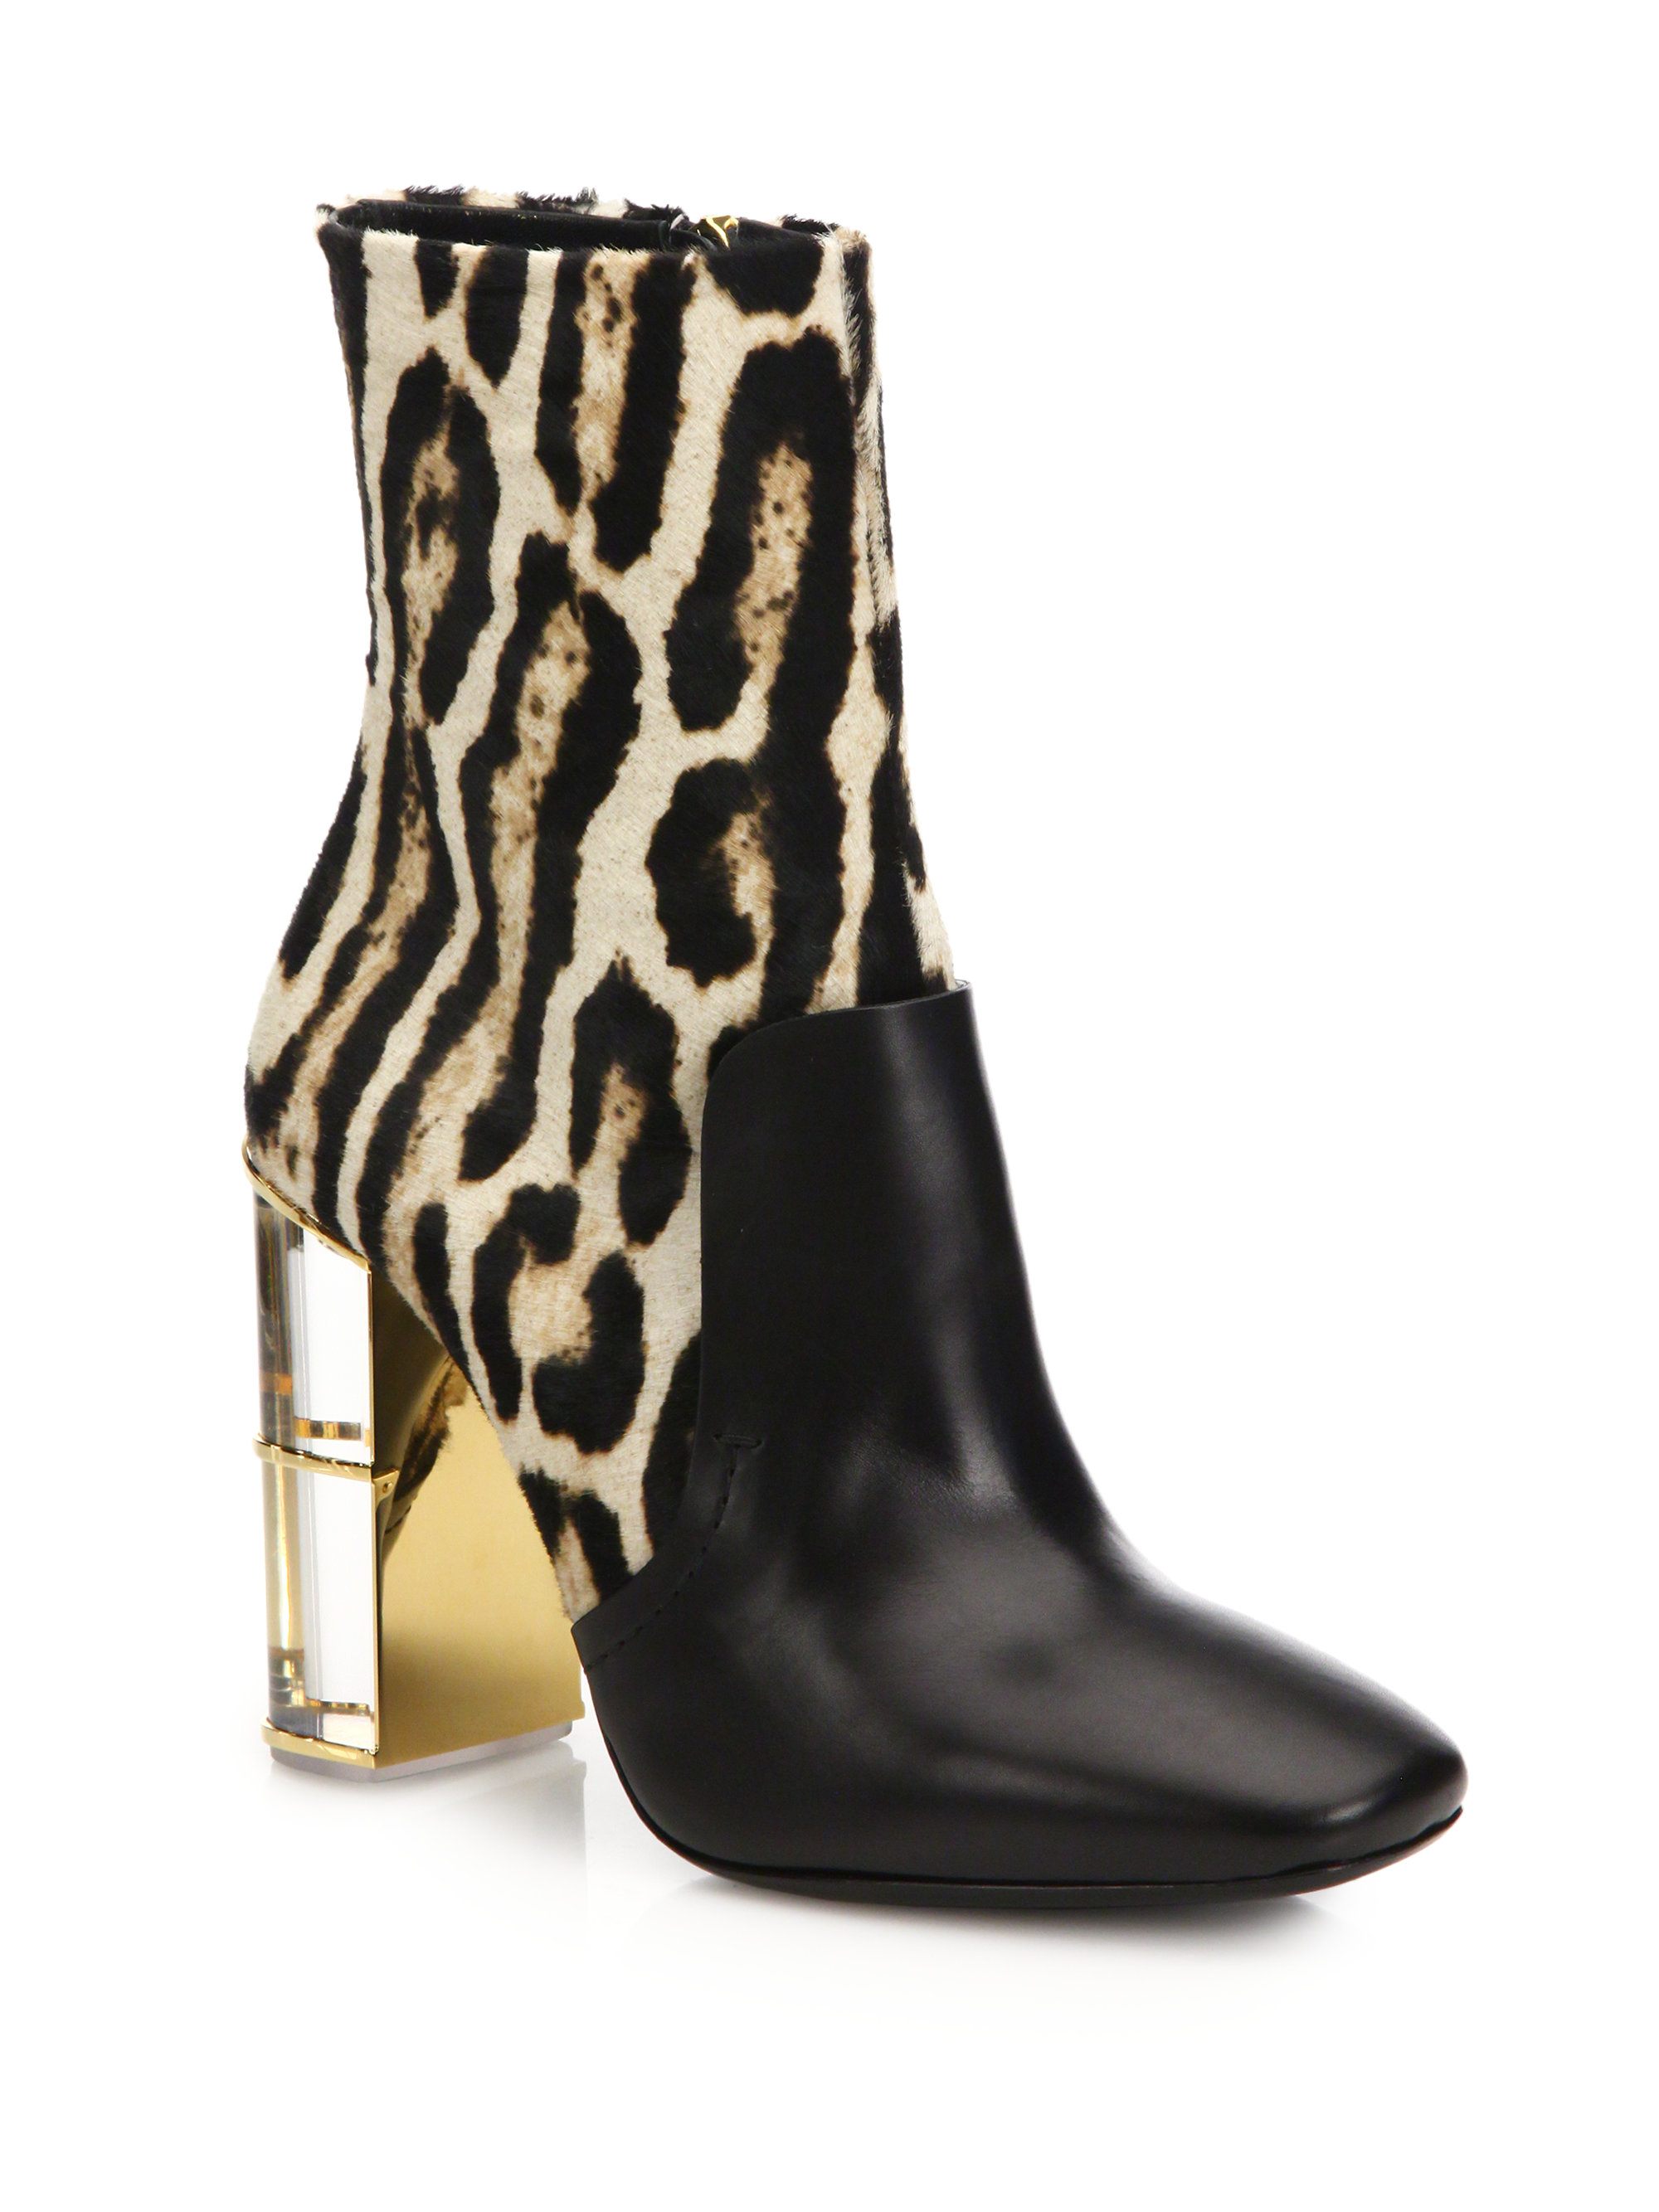 Lyst - Roberto Cavalli Leopard-Print Calf-Hair Ankle Boots in Black